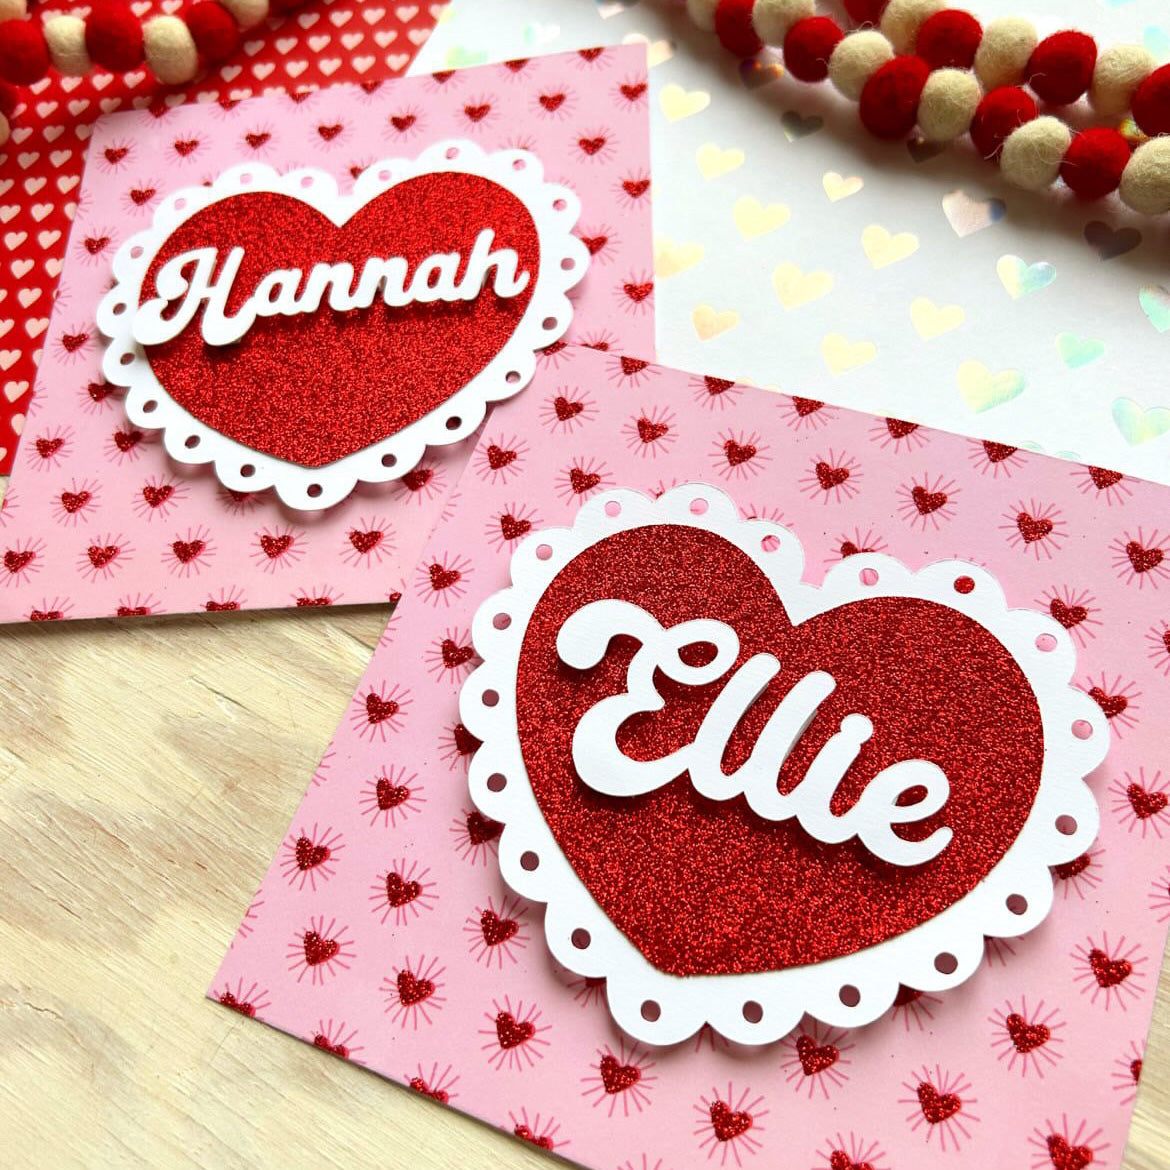 handmade valentine card featuring heartbeat glitter heart